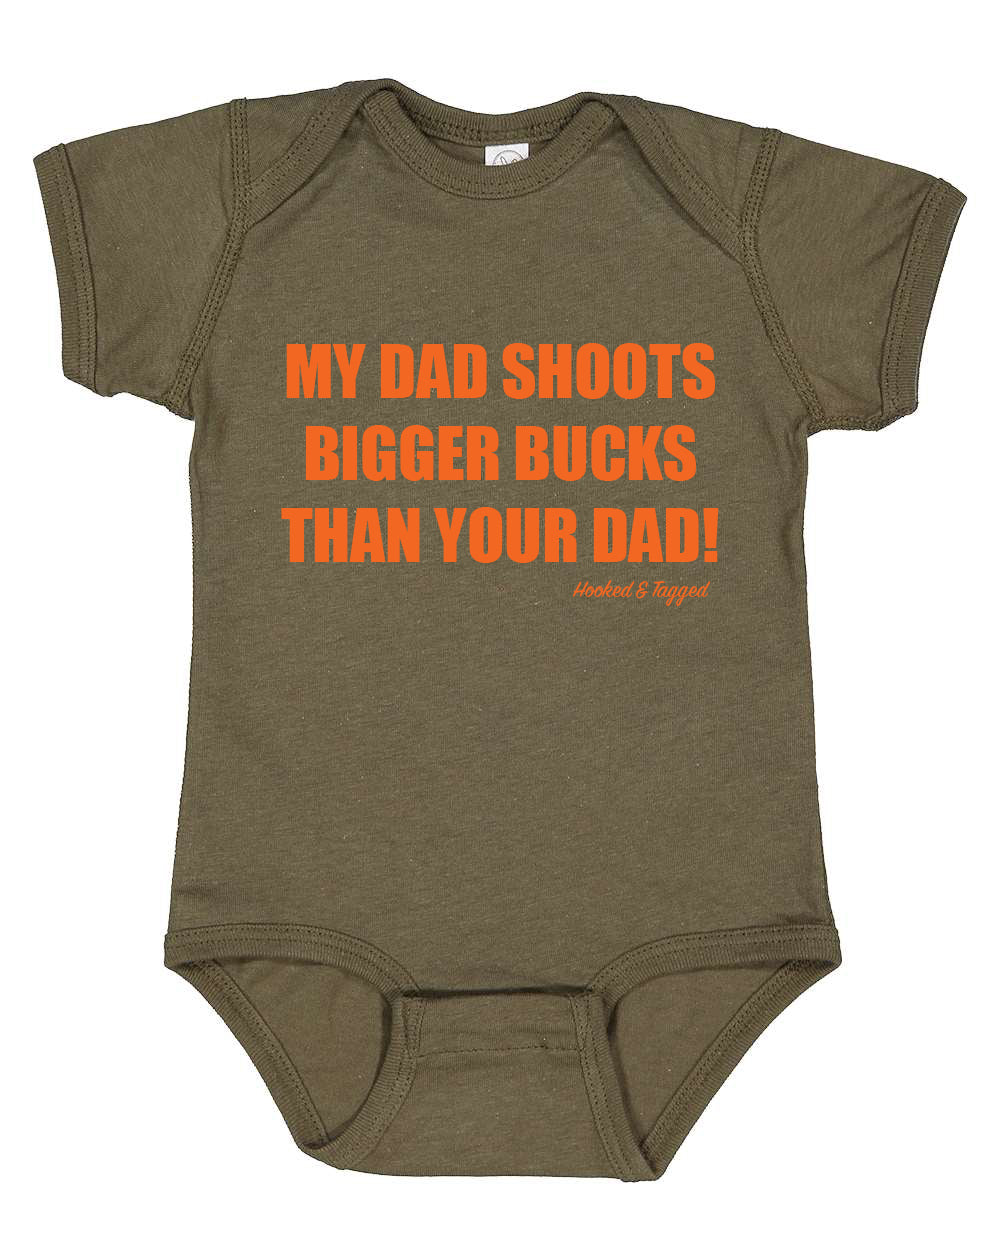 H&T "My Dad Shoots Bigger Bucks Than Your Dad" Onesie